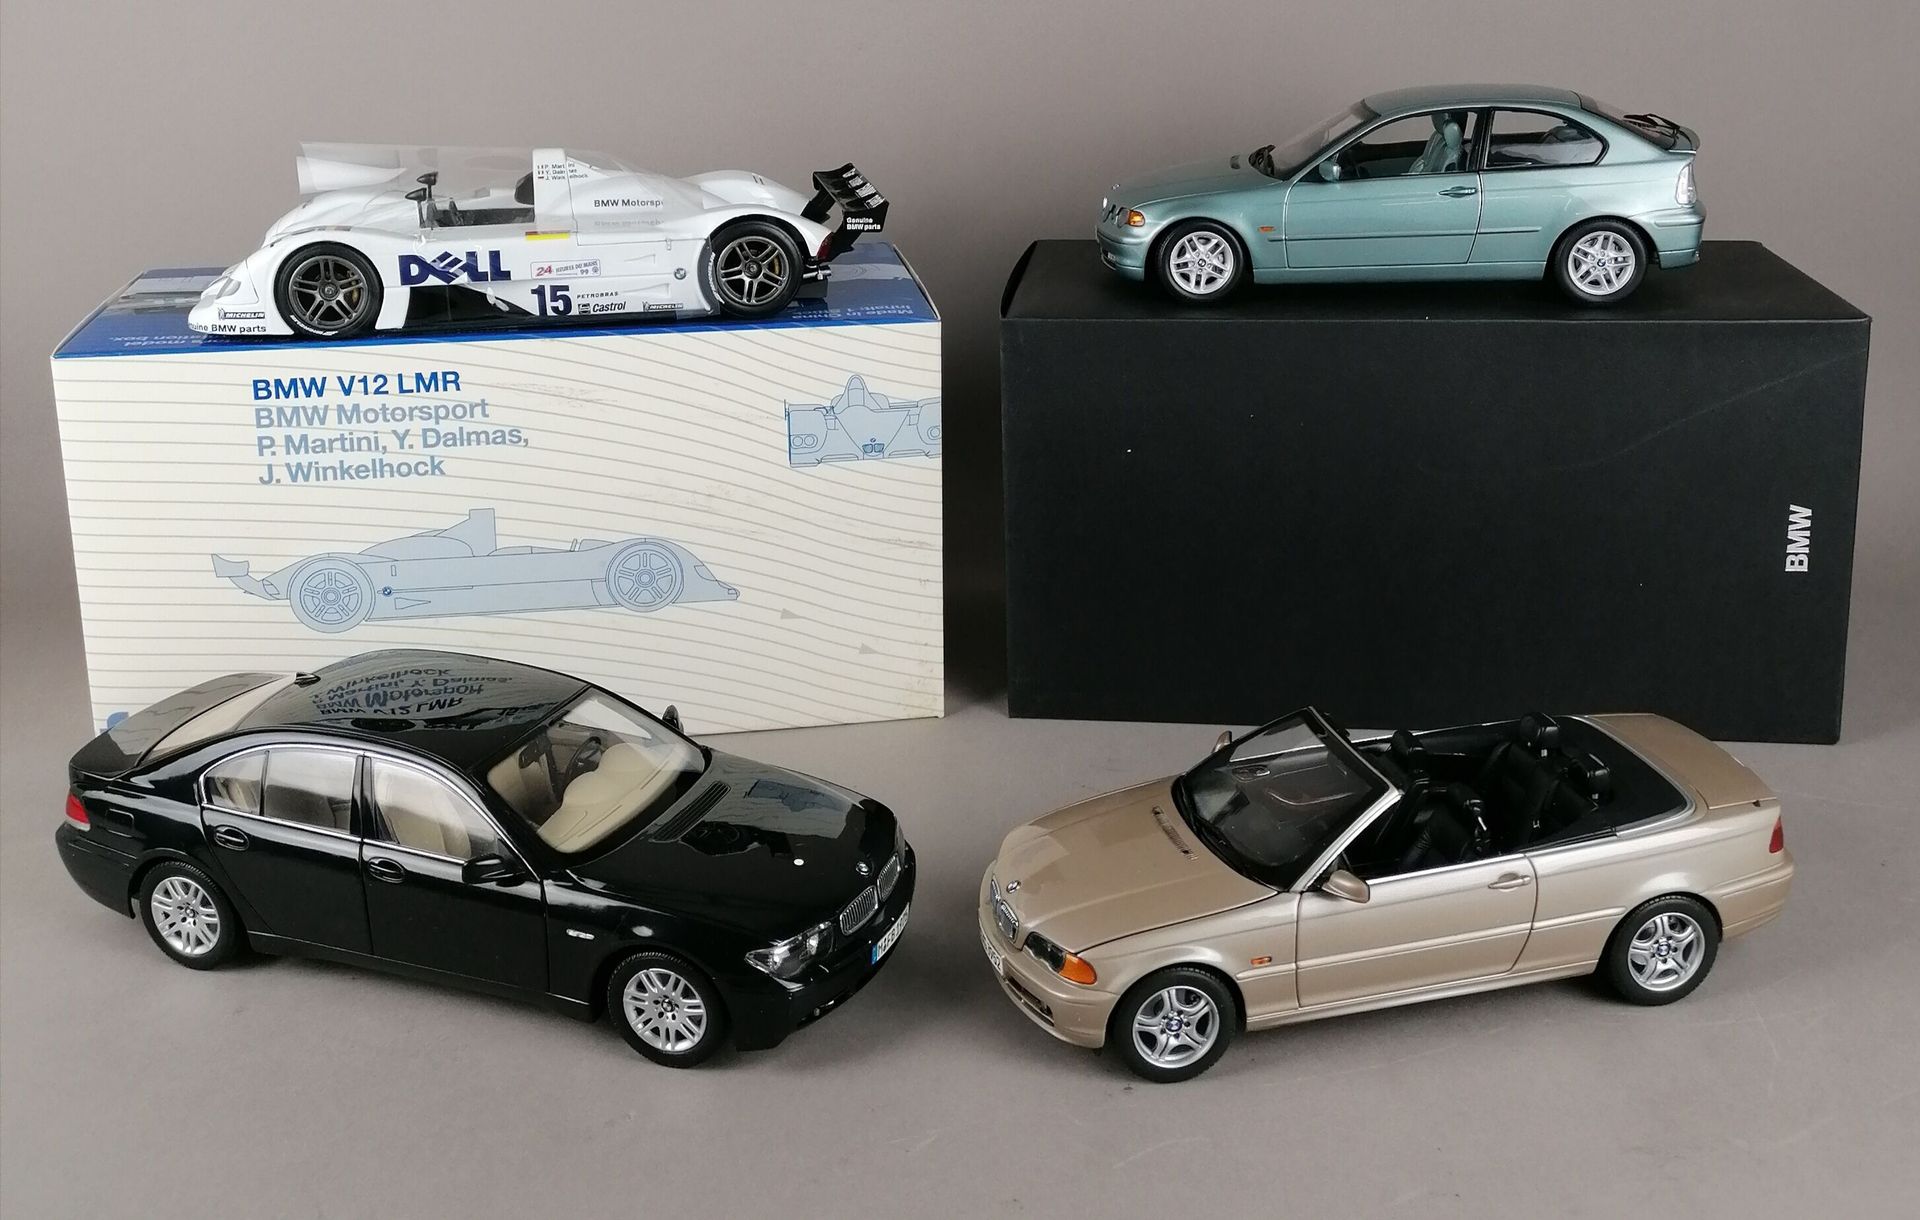 Null BMW - QUATRE BMW échelle 1/18 :

1x V12 LMR

1x 7Series

1x 325Ti Compact

&hellip;